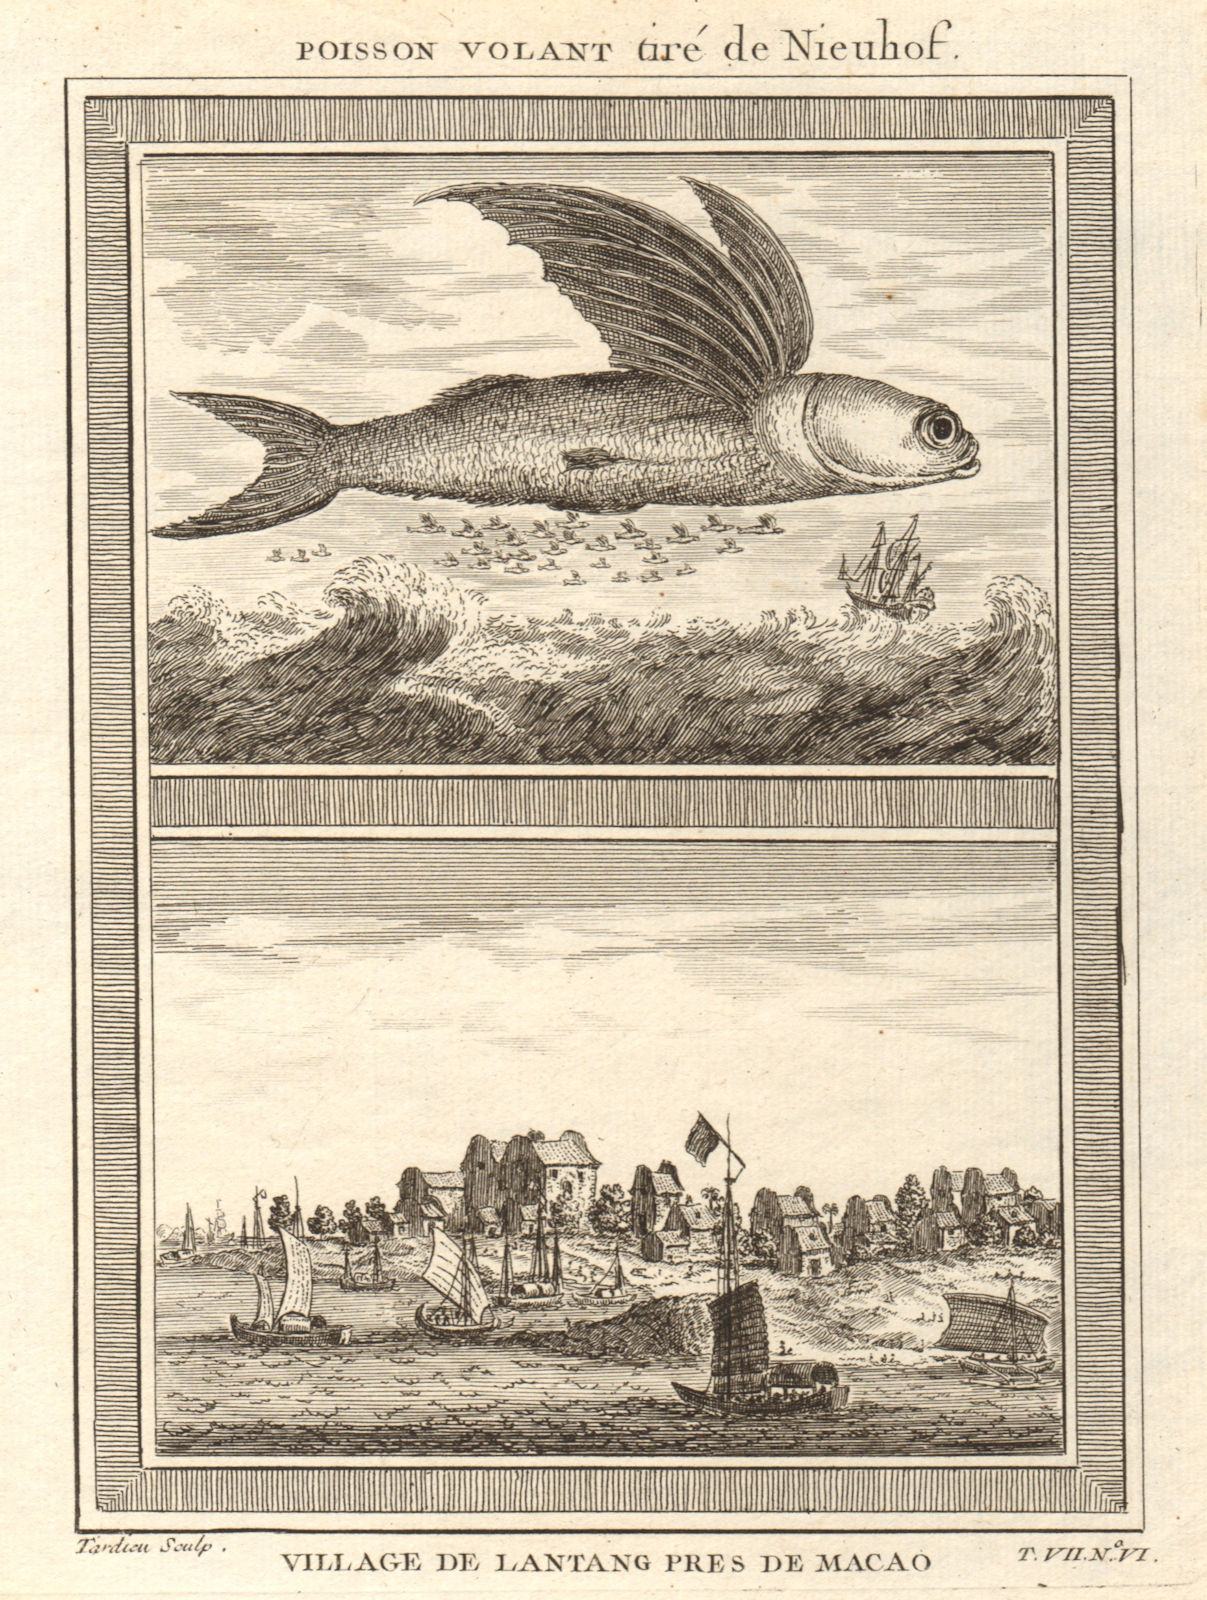 'Poisson volant'. Flying fish, and view of Liantang village, Macau. China 1749